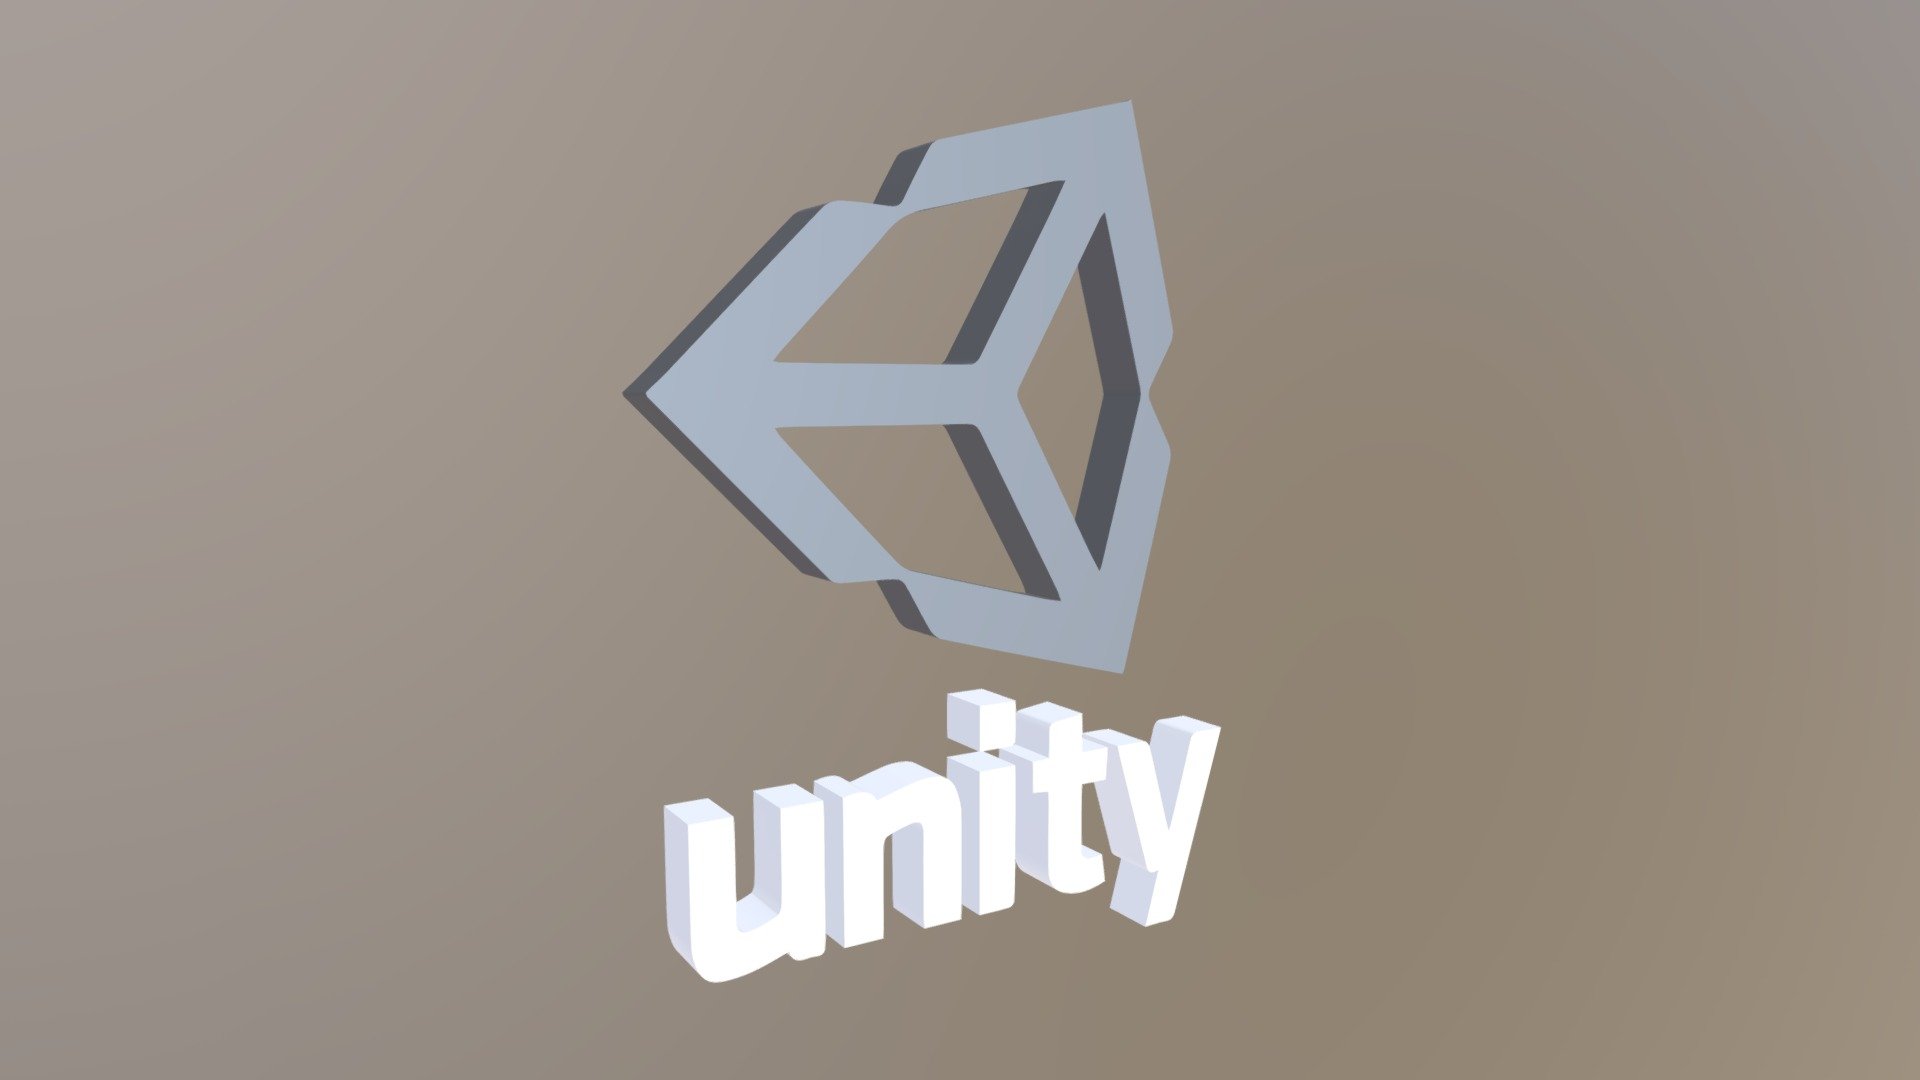 unity 3d free